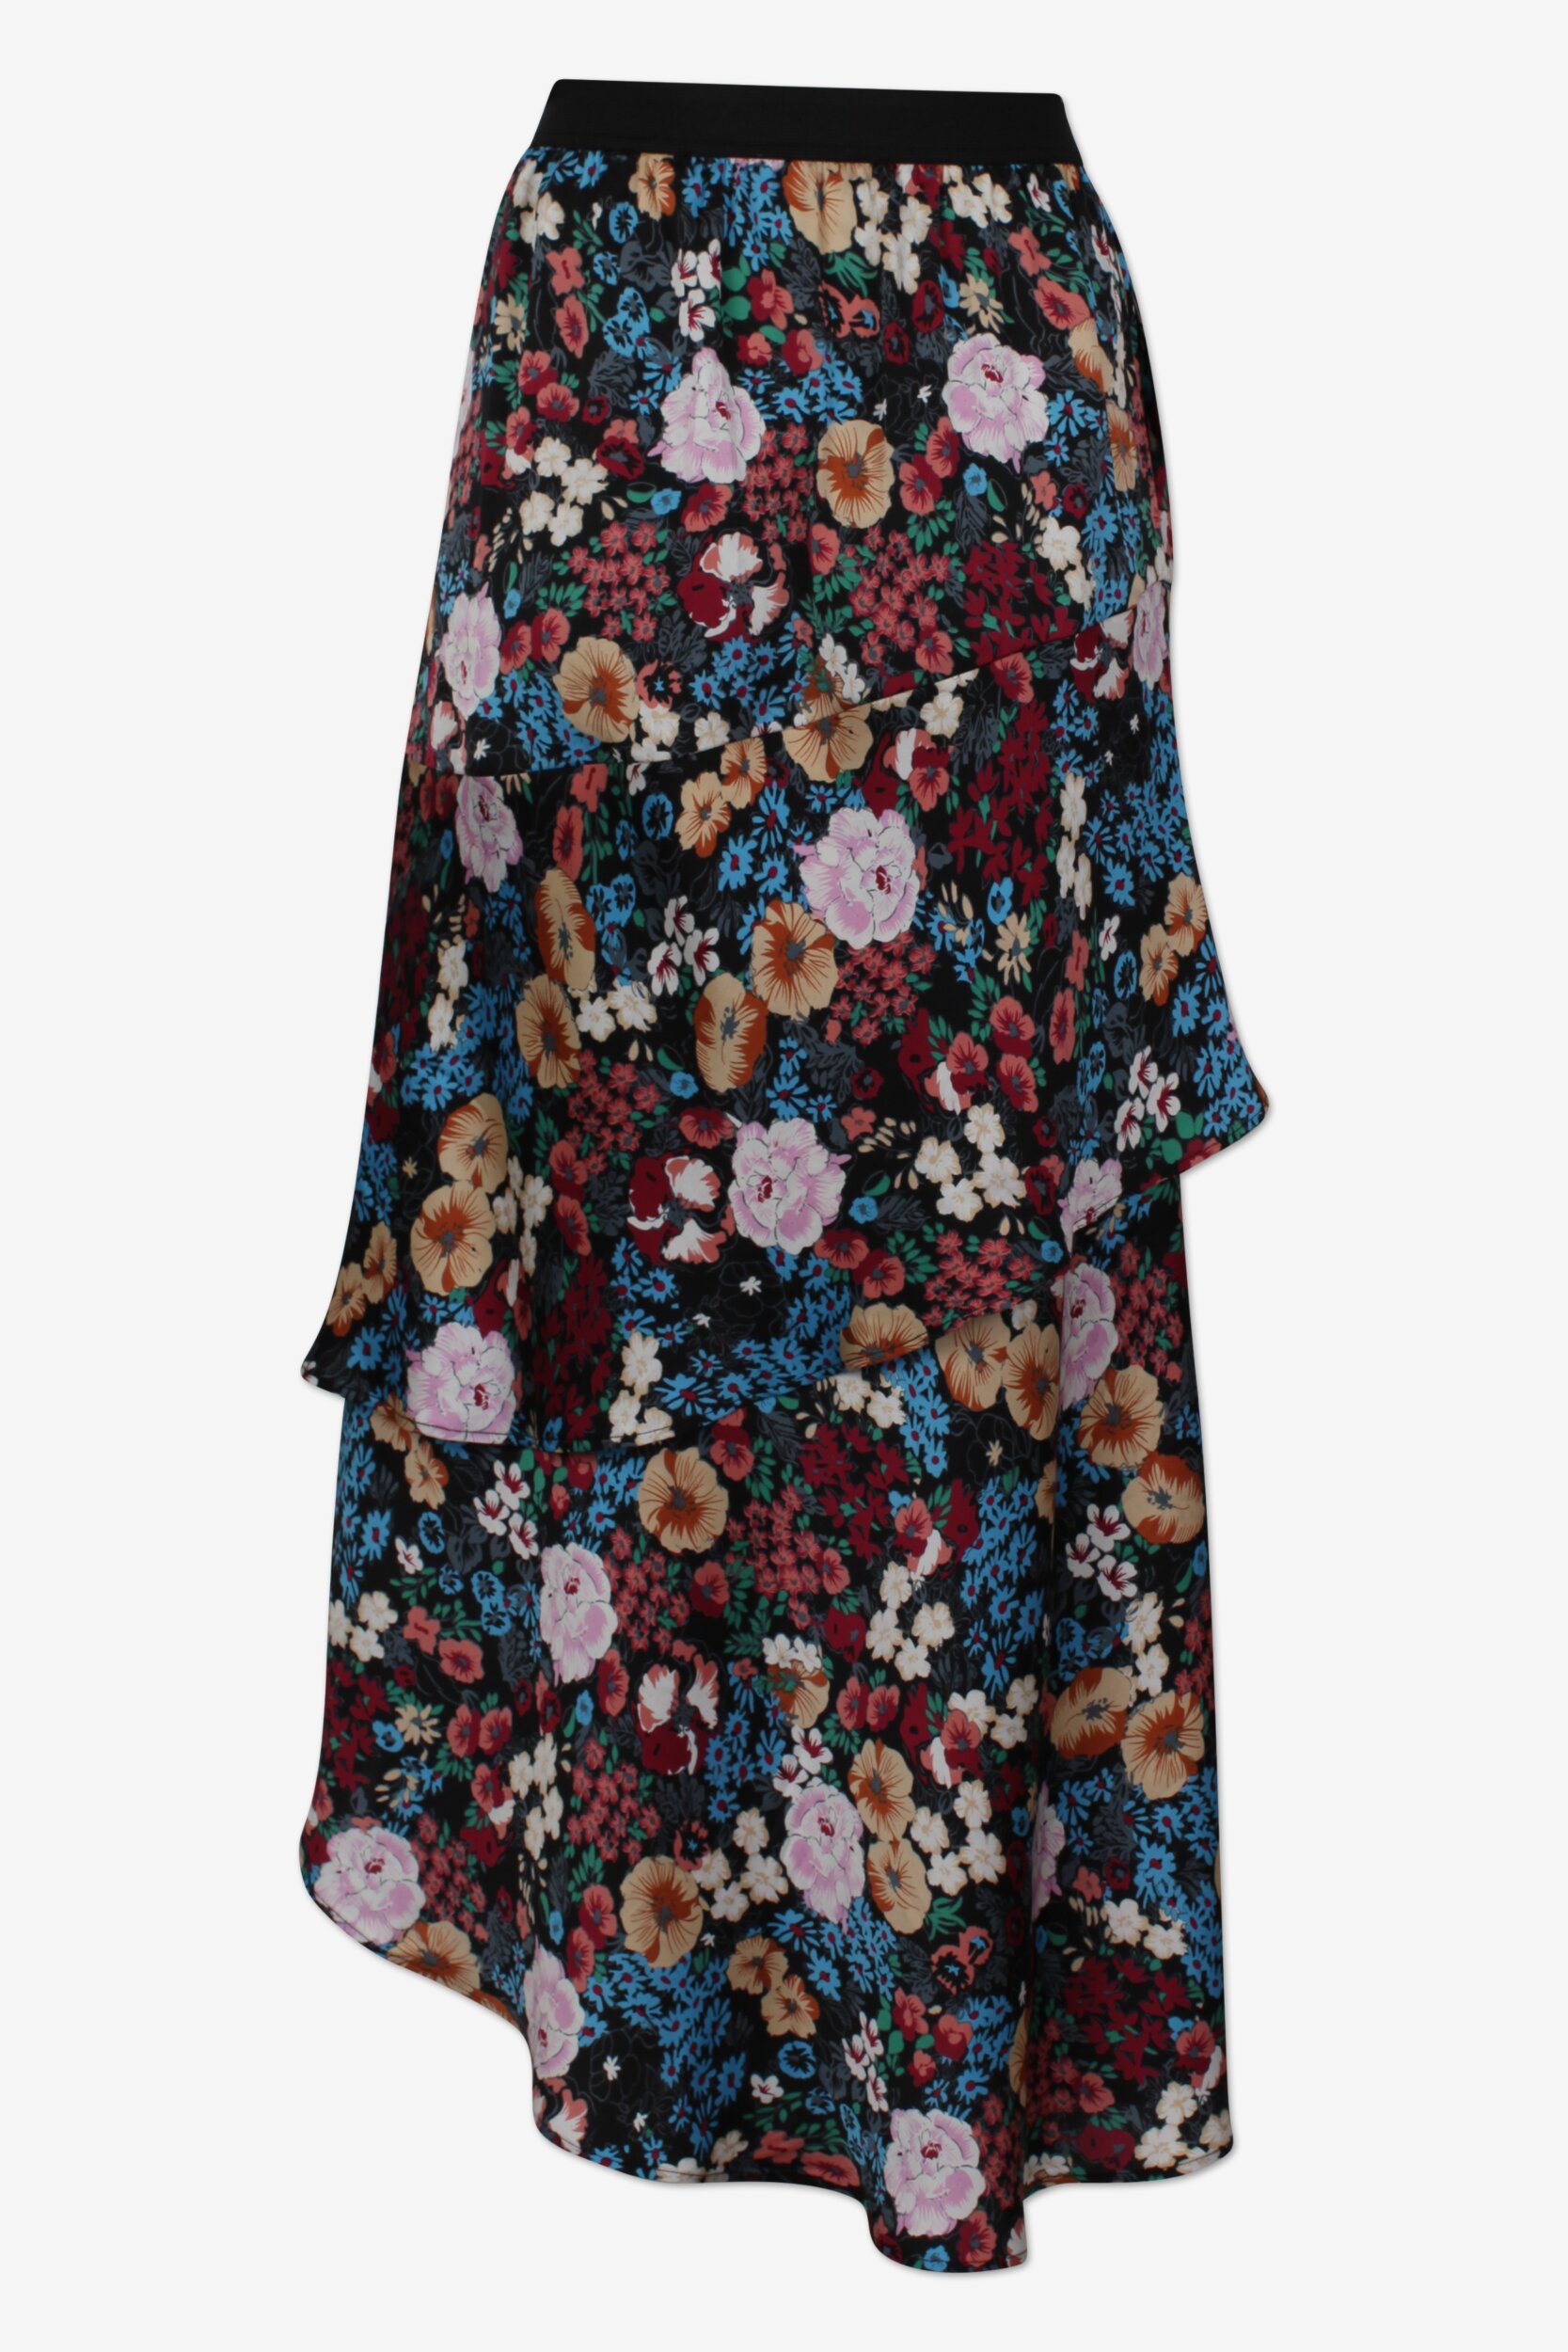 Samour Special Edition Skirt Flower Power  - back image